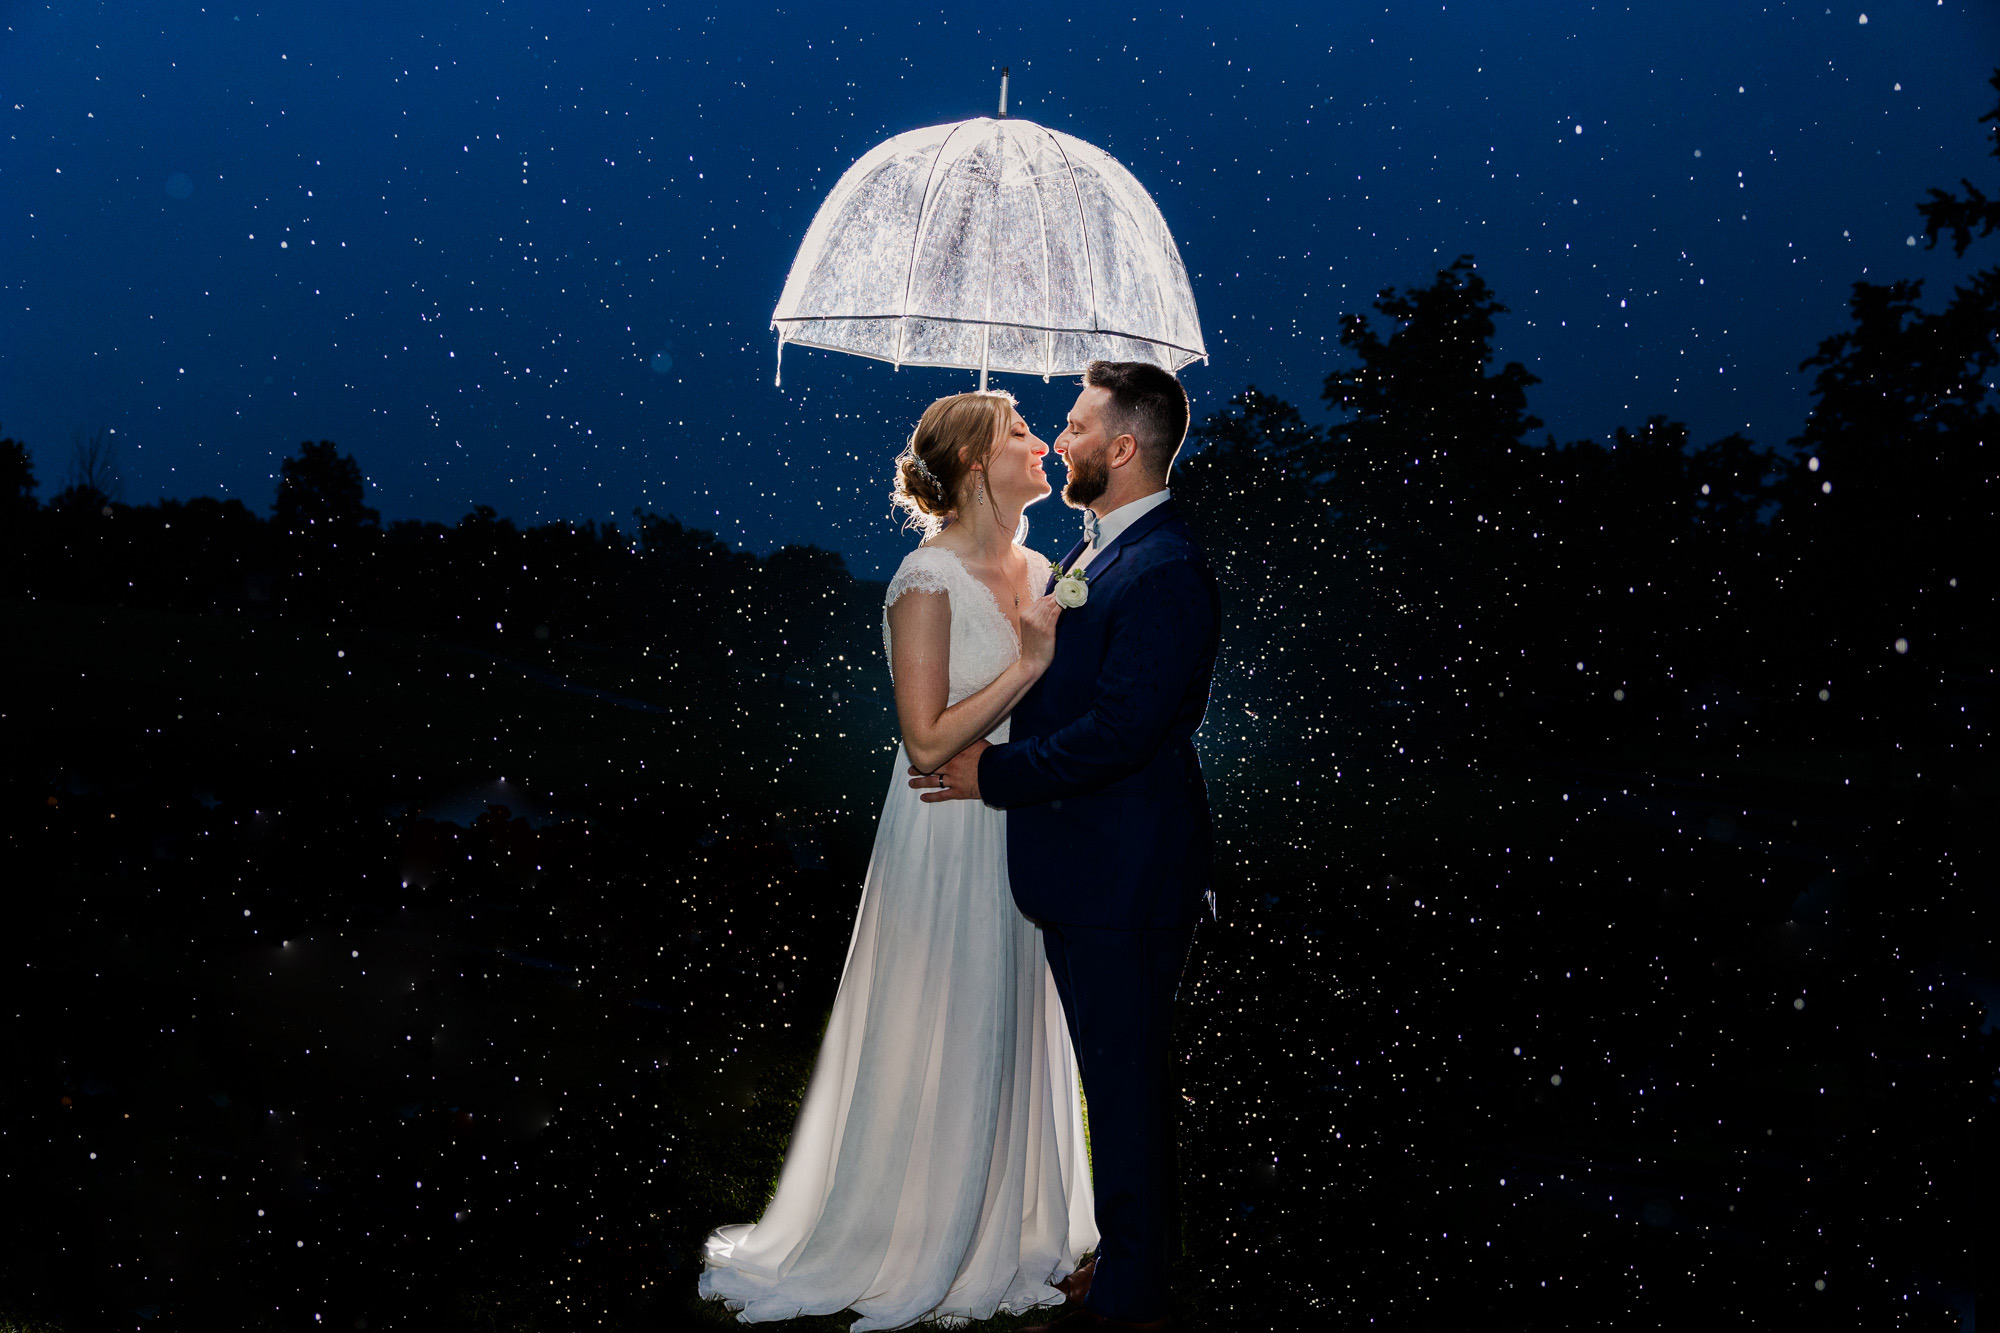 Bride and Groom Under Umbrella in the Rain